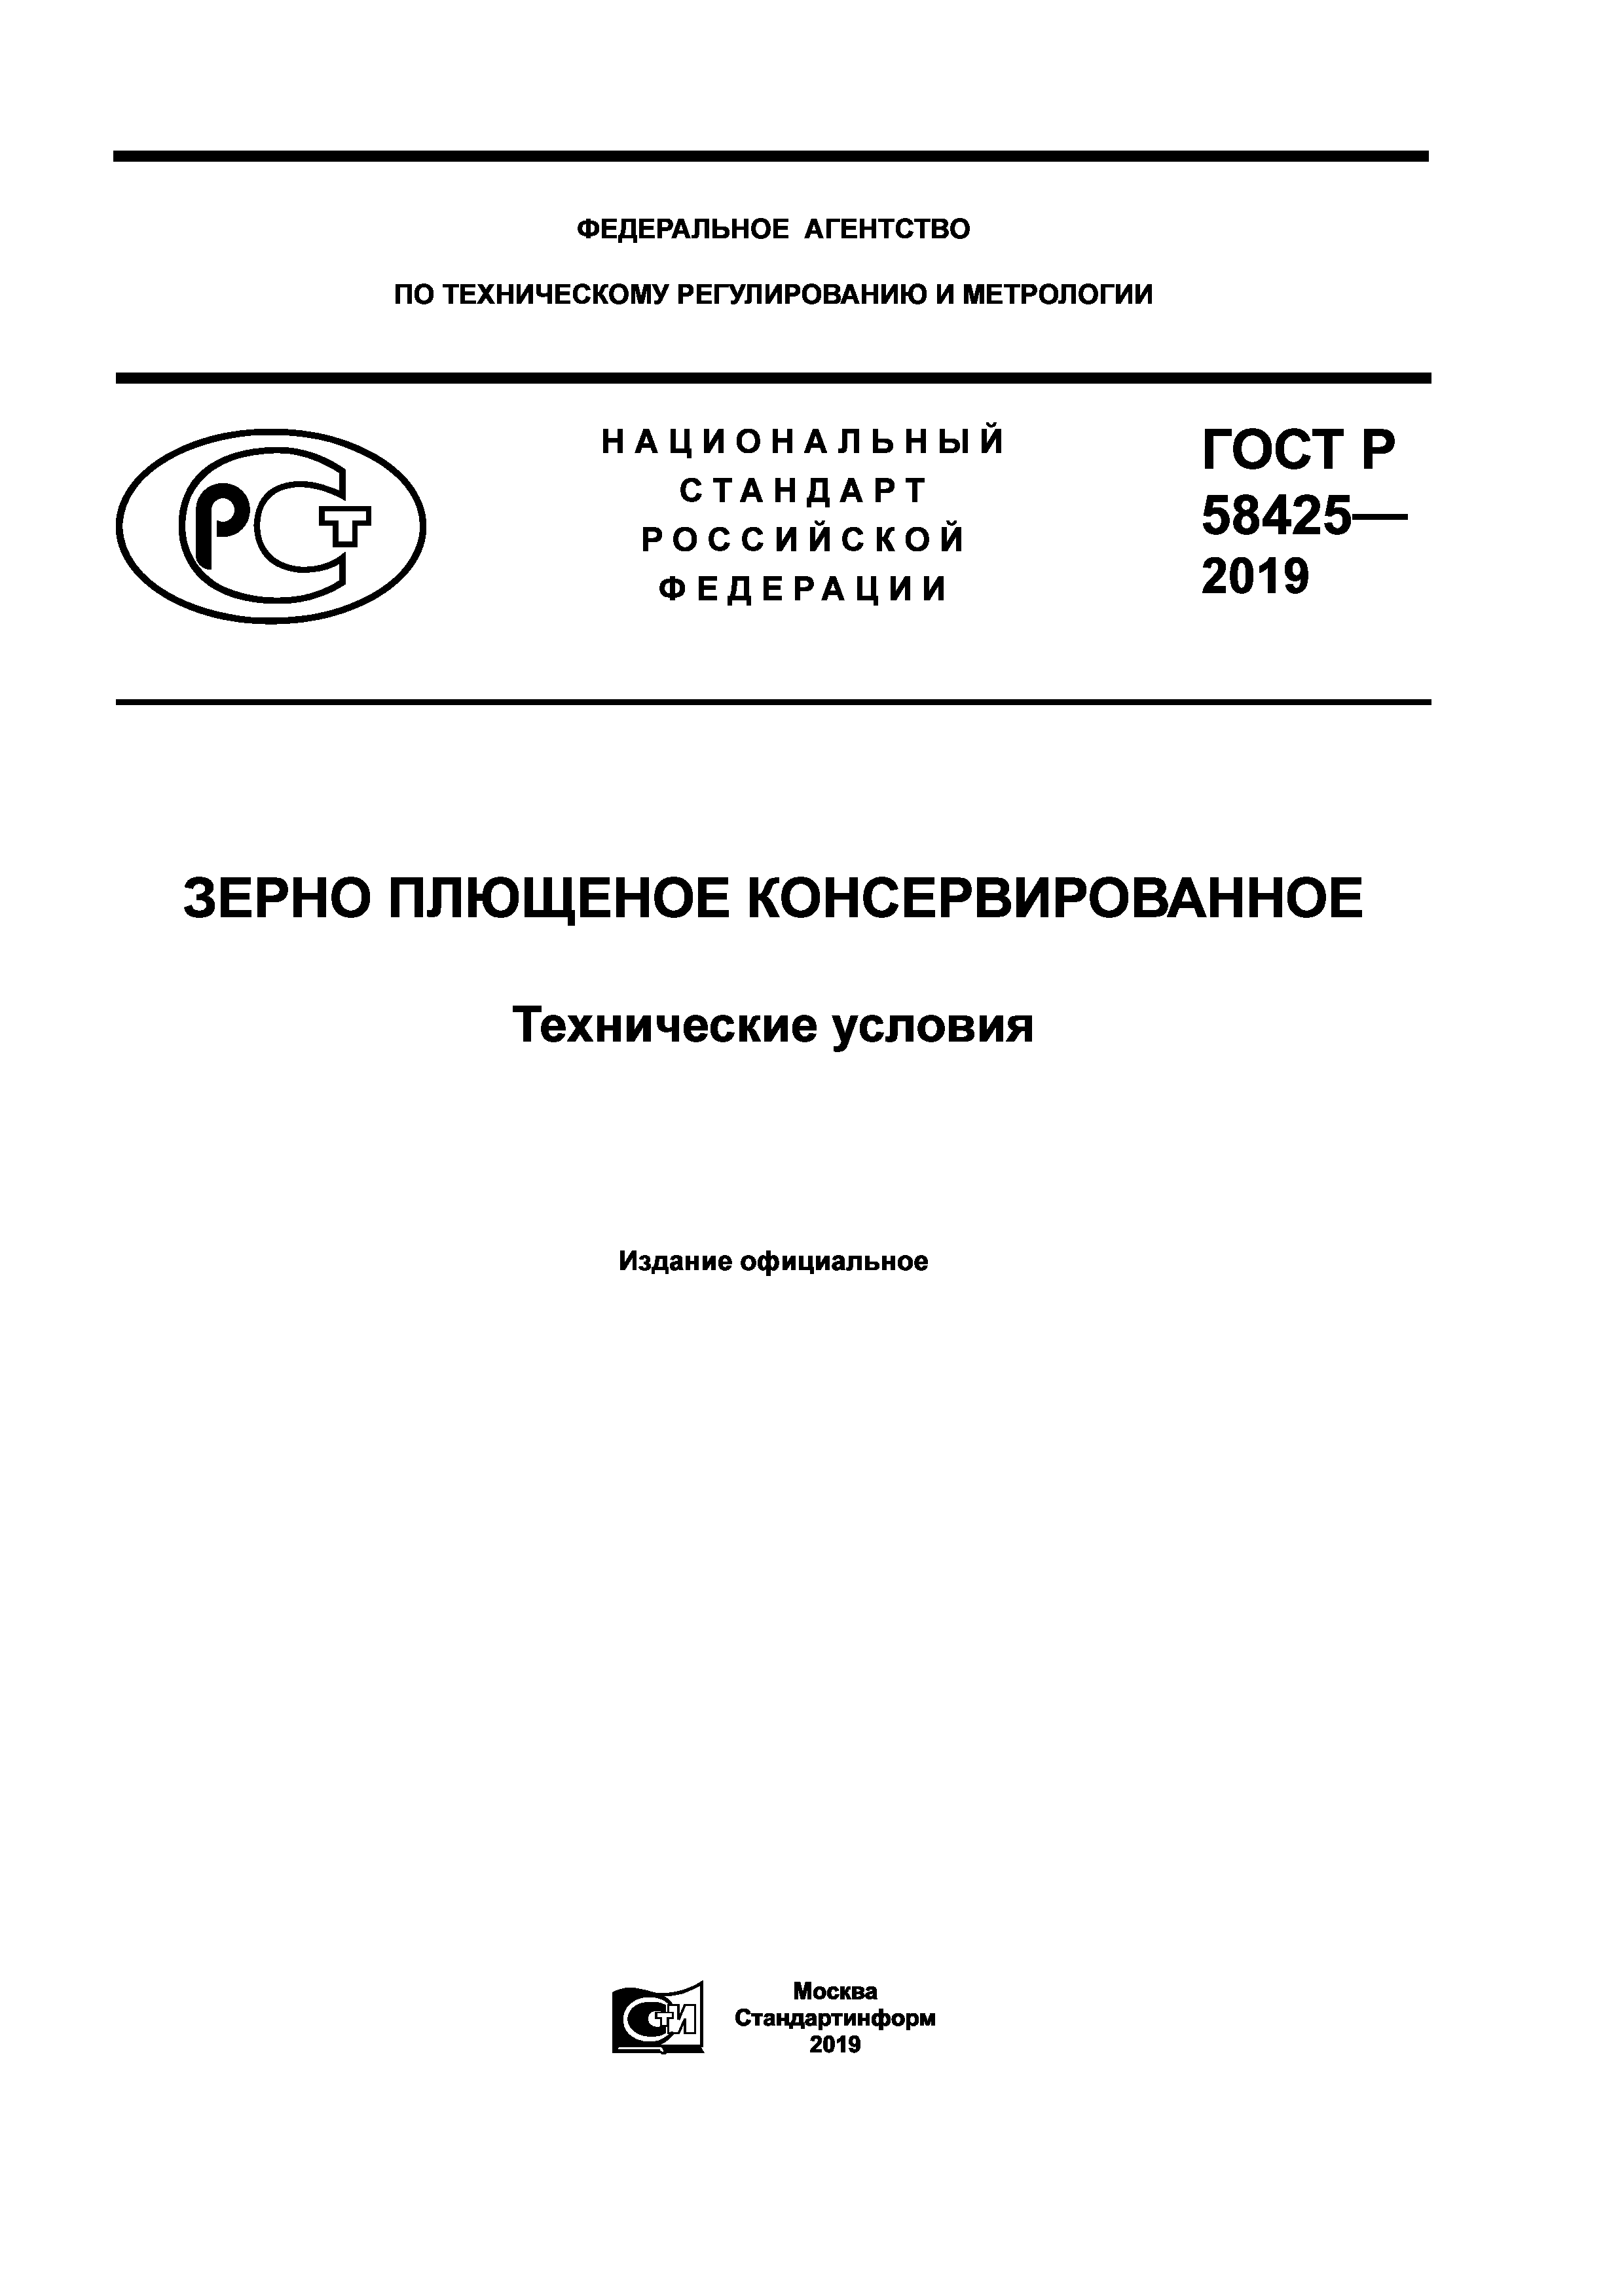 ГОСТ Р 58425-2019